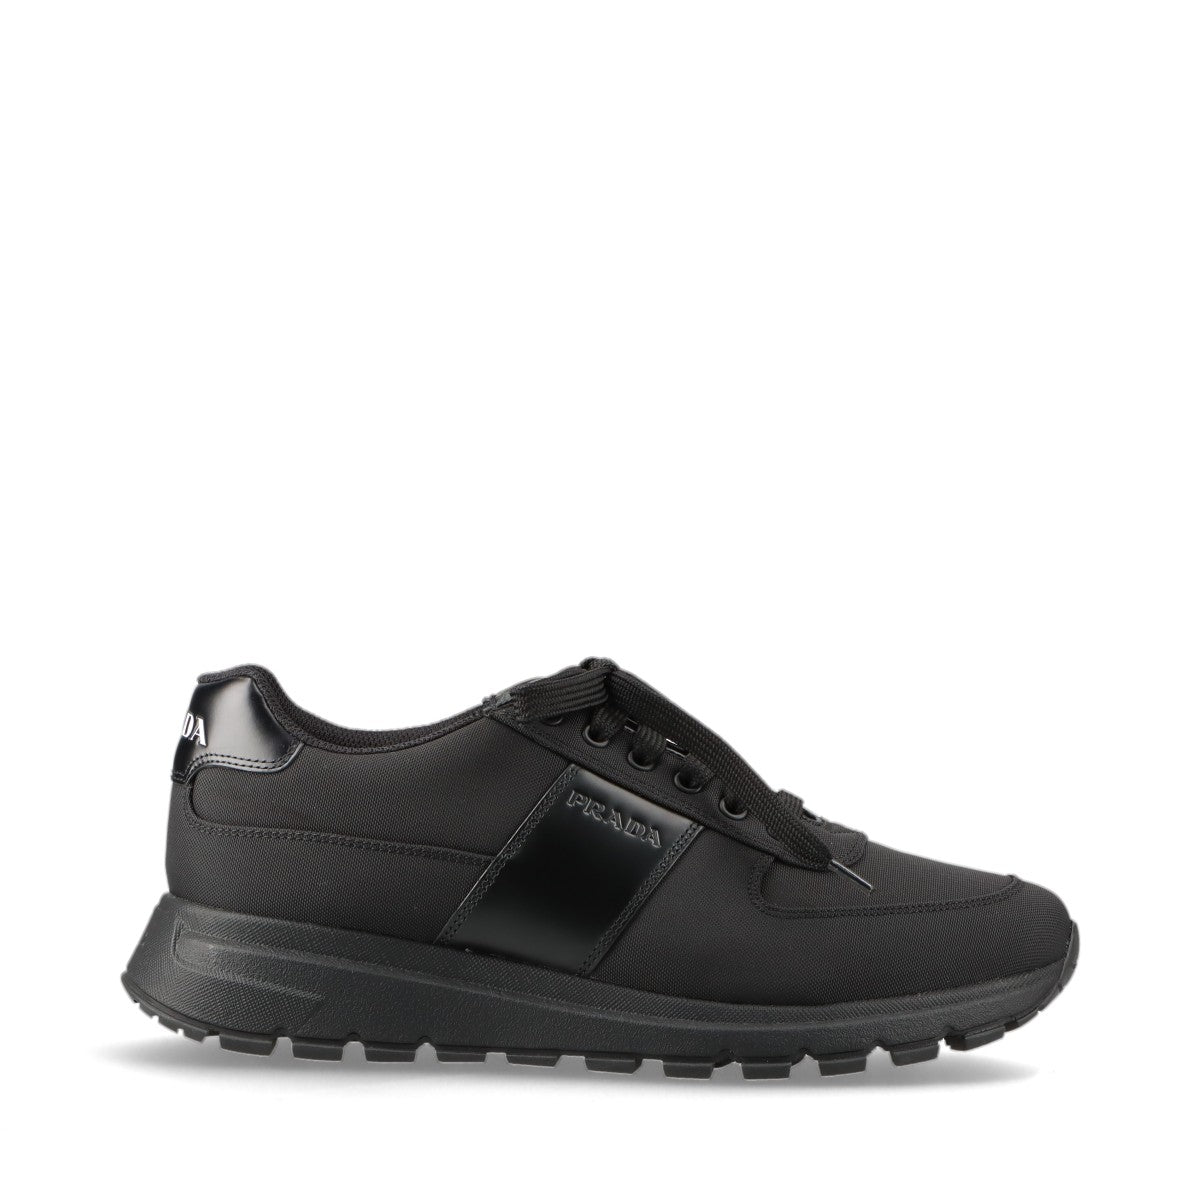 Prada Re Nylon Re Nylon Nylon & Leather Sneakers UK8 1/2 Men's Black